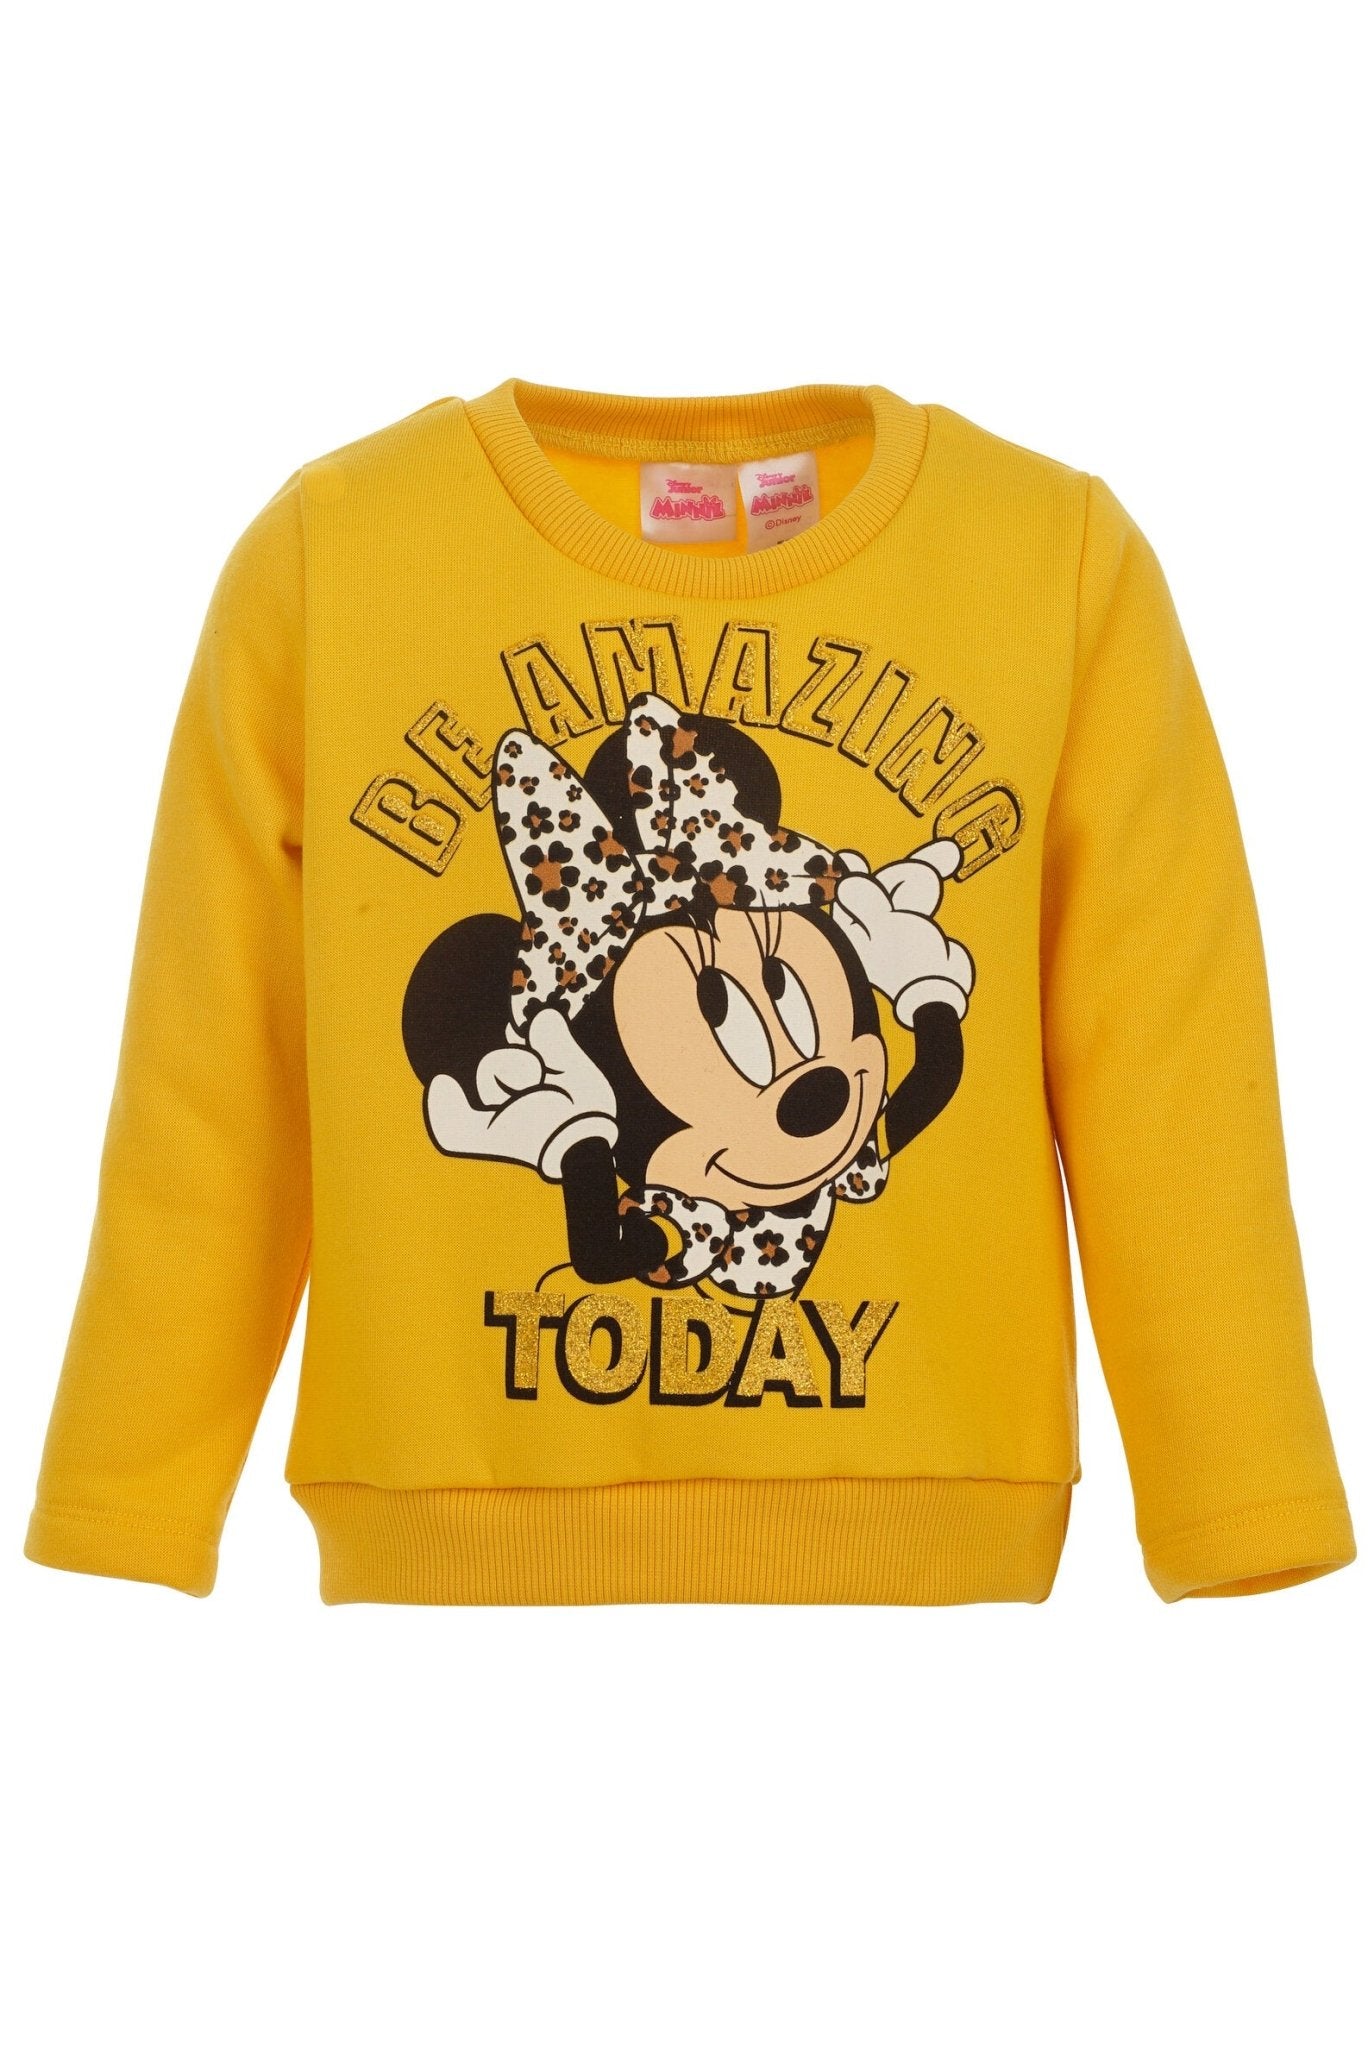 Disney Minnie Mouse Pullover Fleece Sweatshirt and Leggings Outfit Set - imagikids